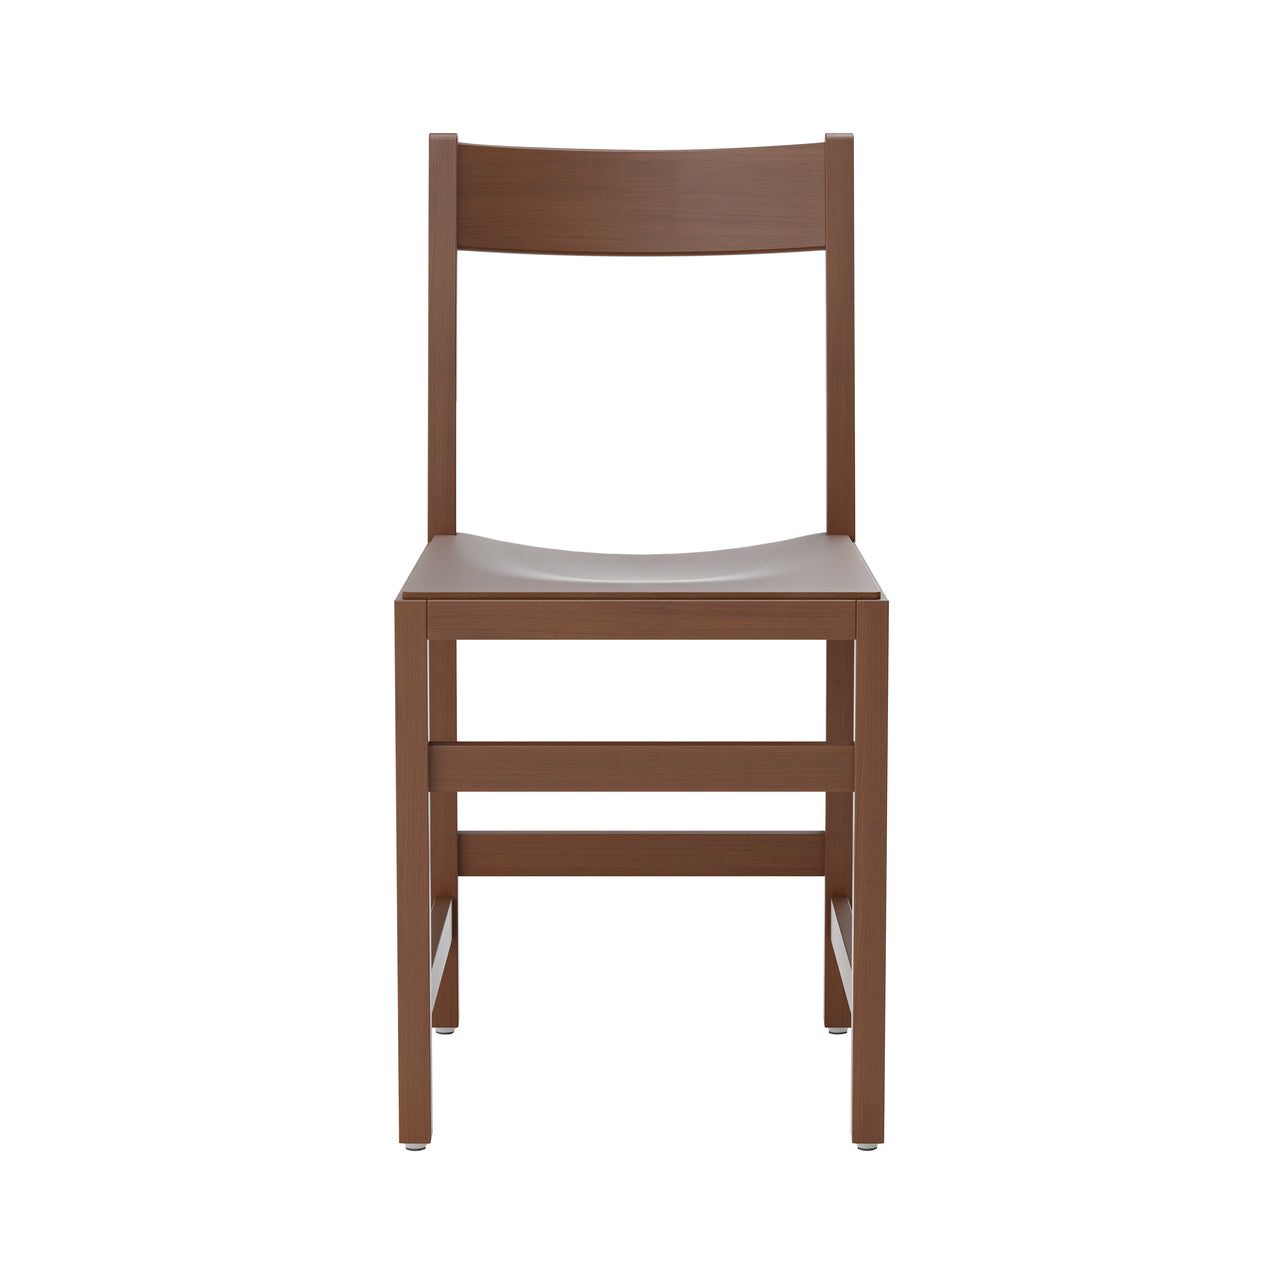 Waiter Chair: Walnut Stained Beech